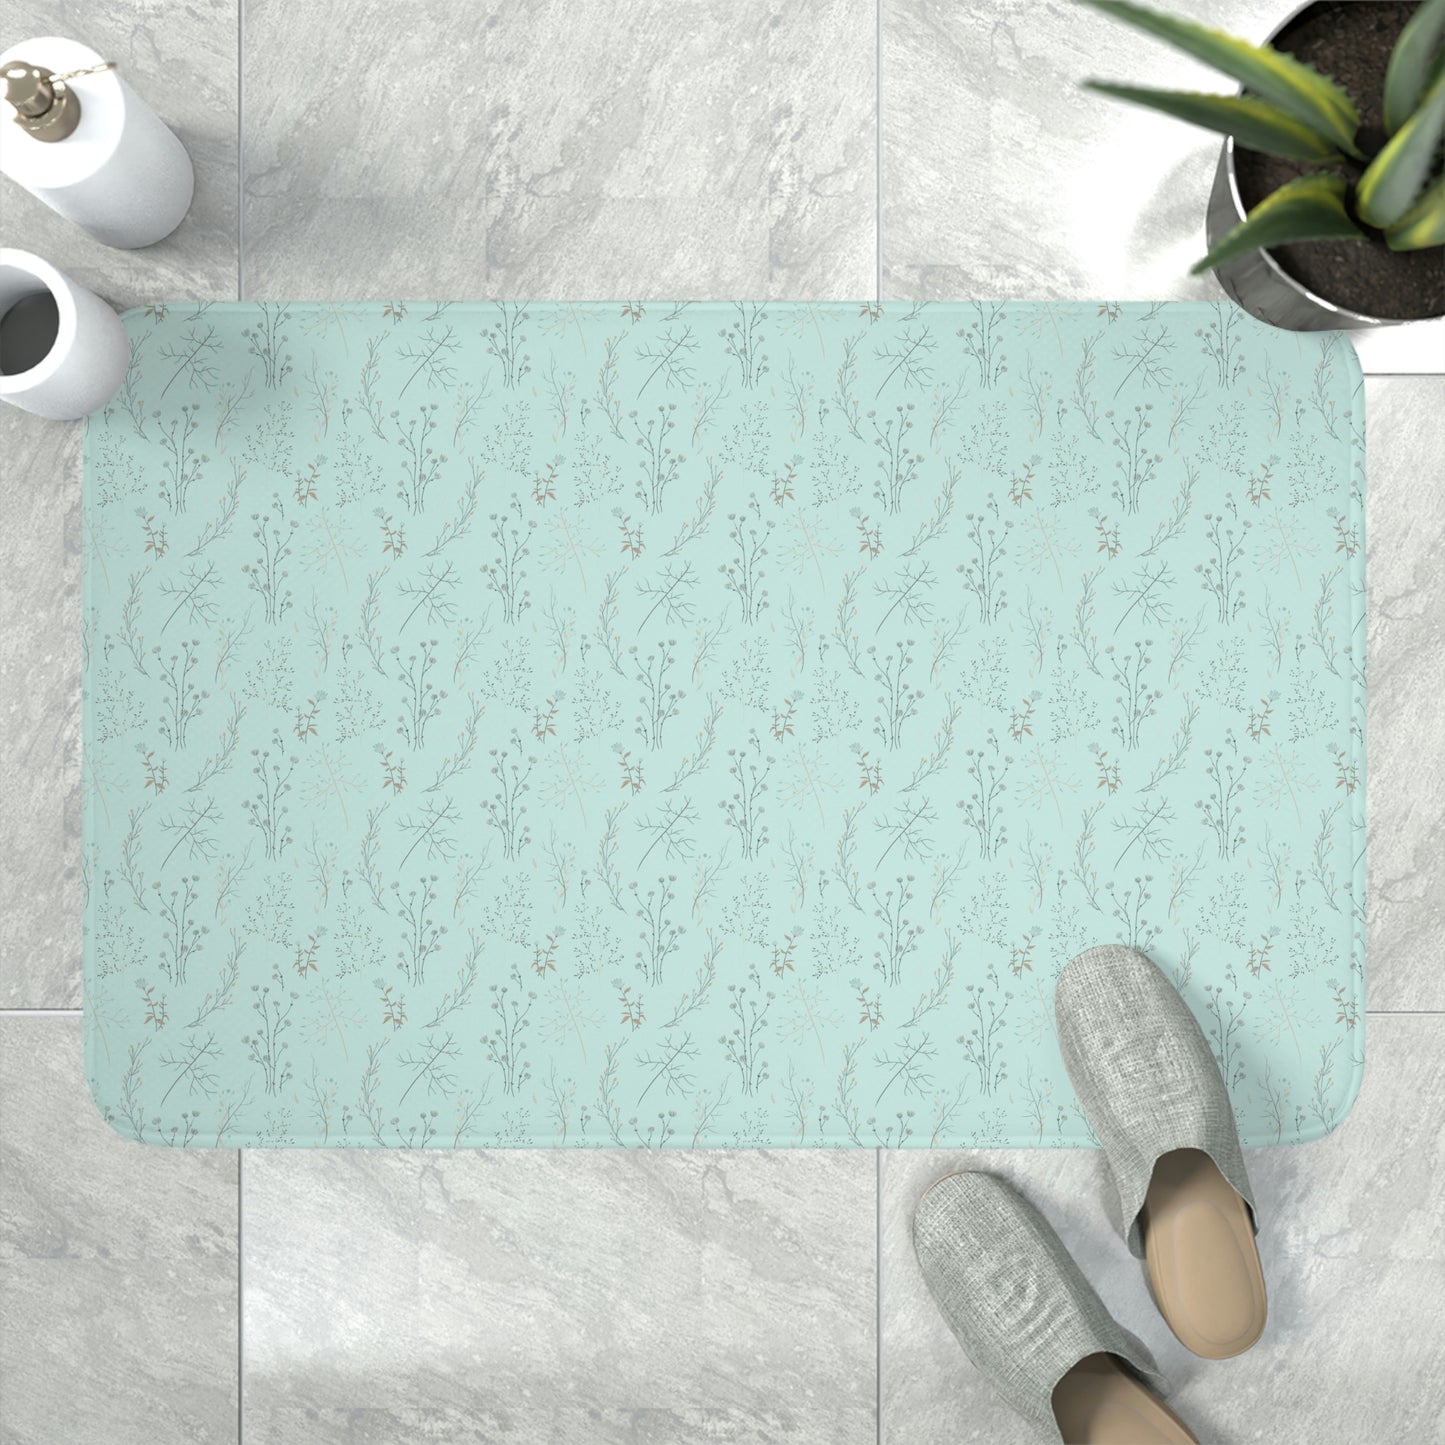 Teal Floral Print Anti-slip Bathmat | 2 Sizes Available